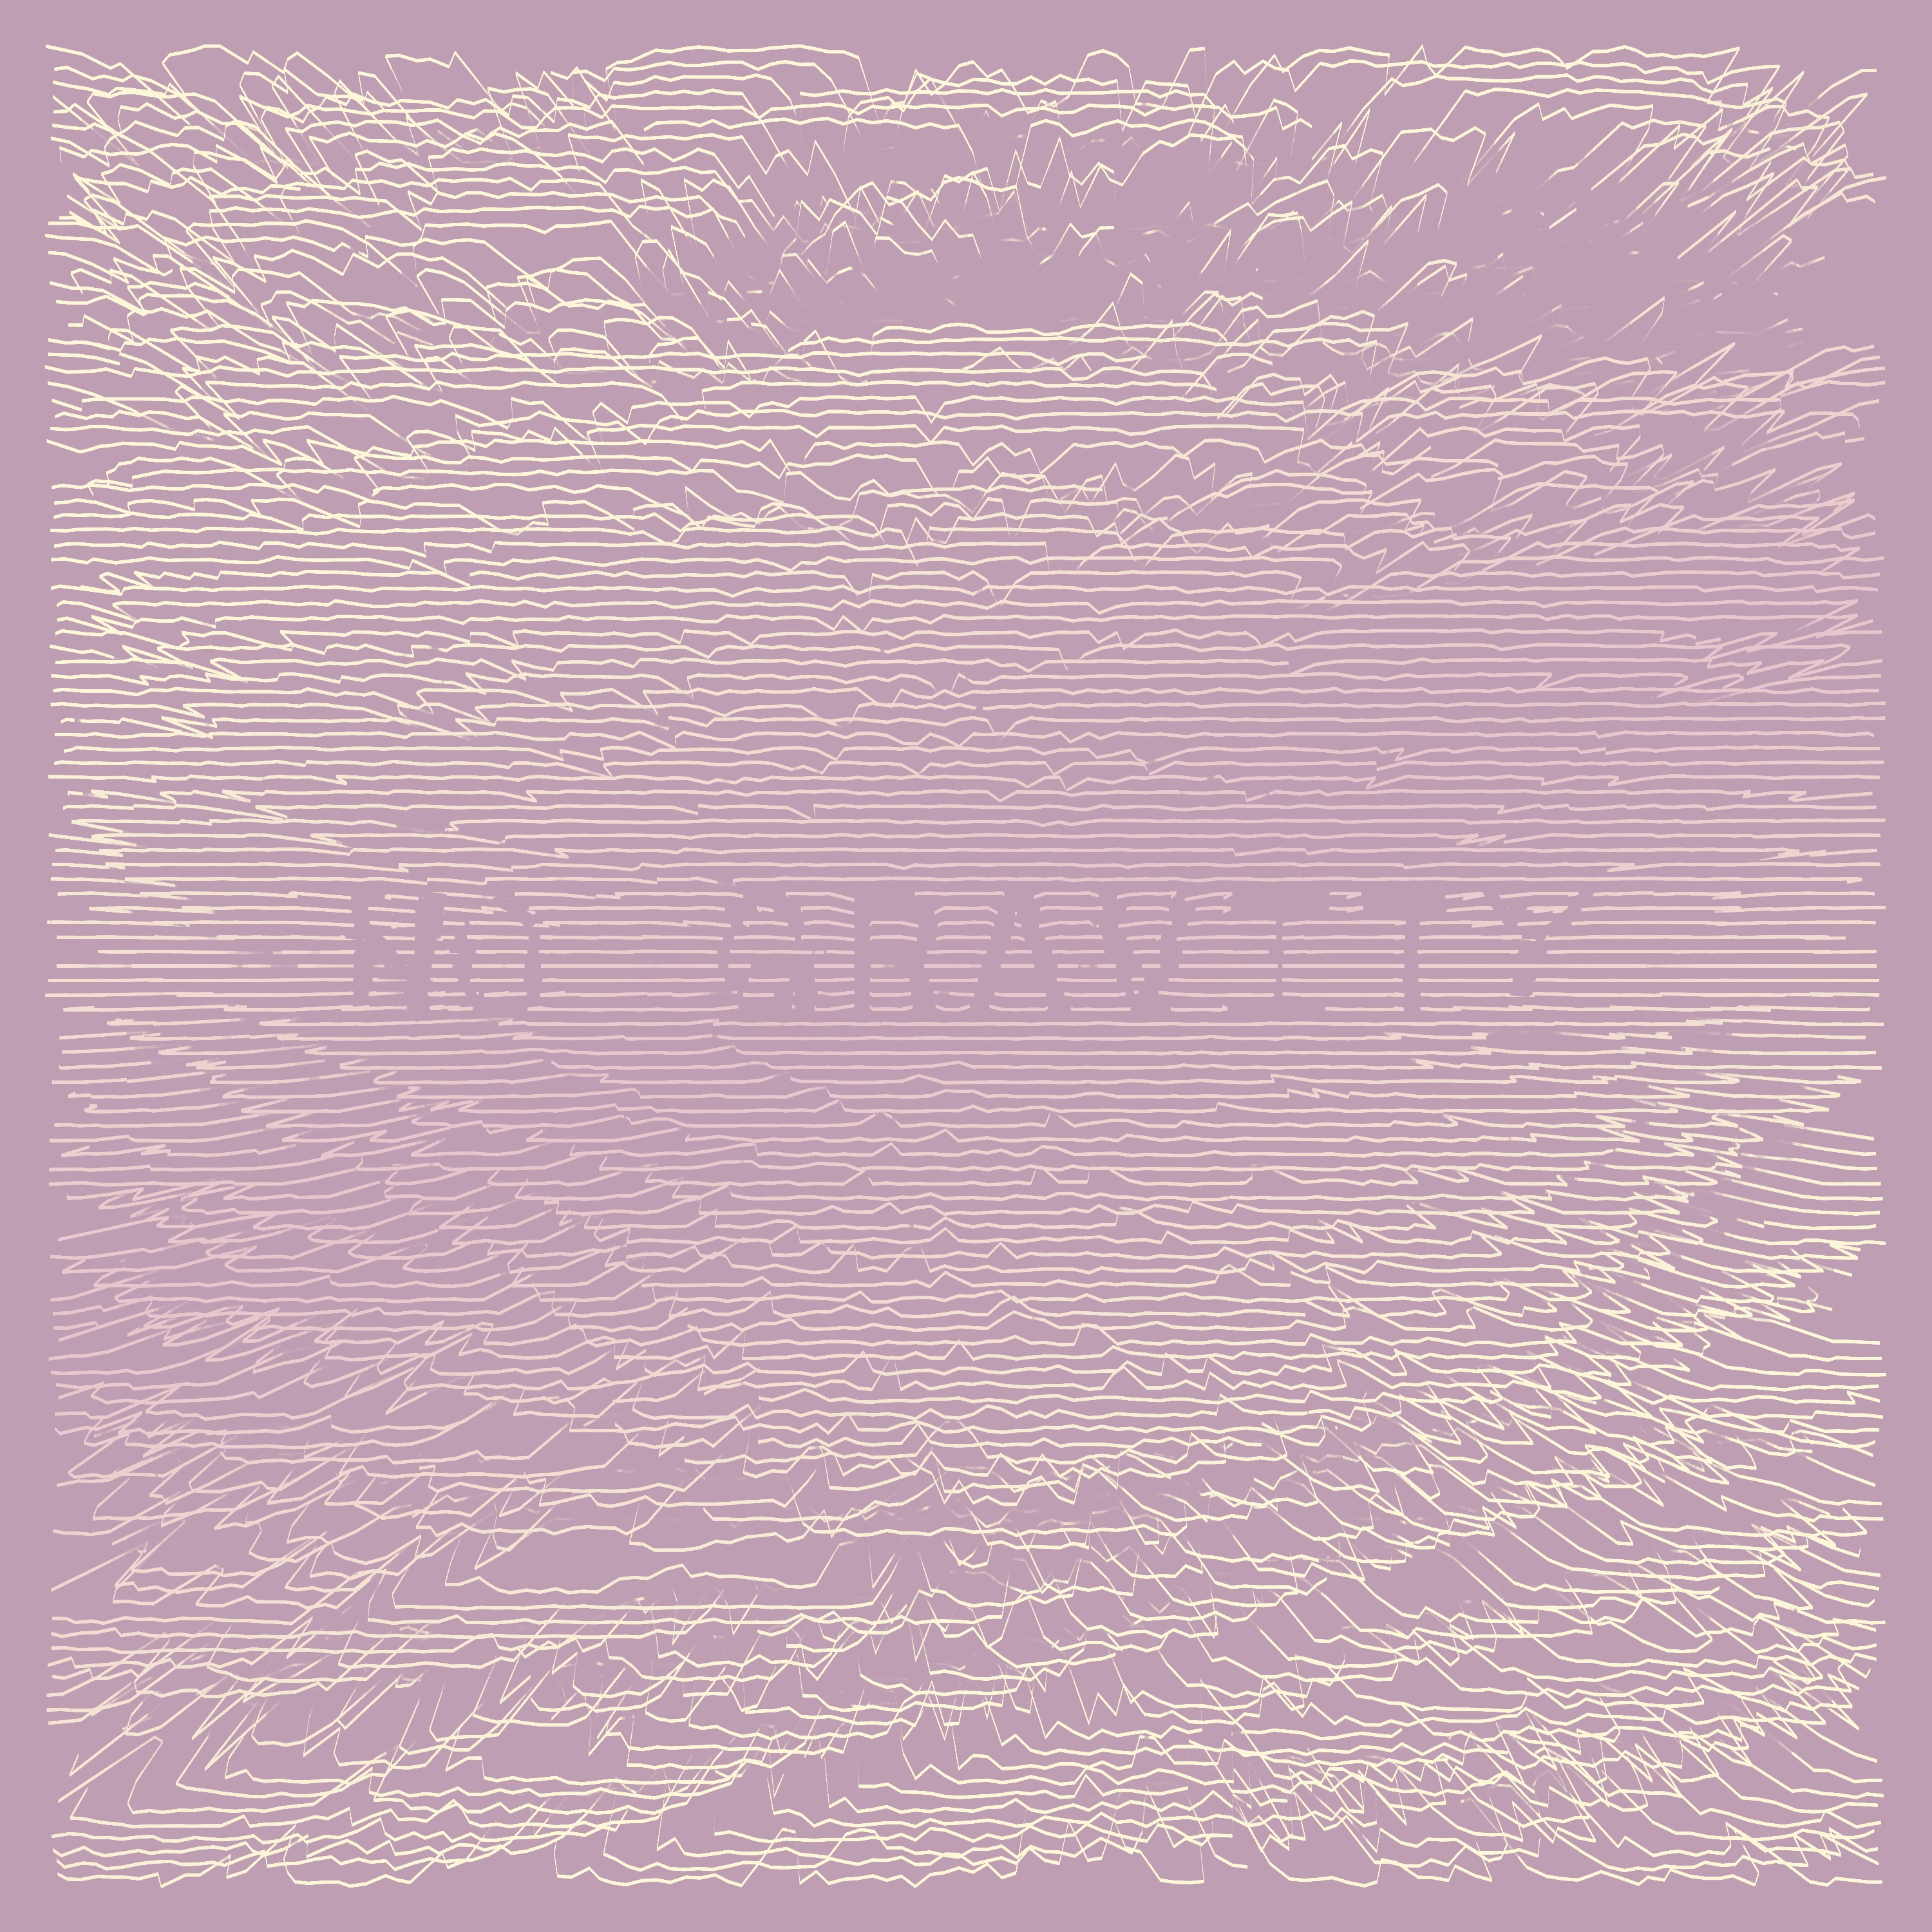 Mnevis – No Gravity